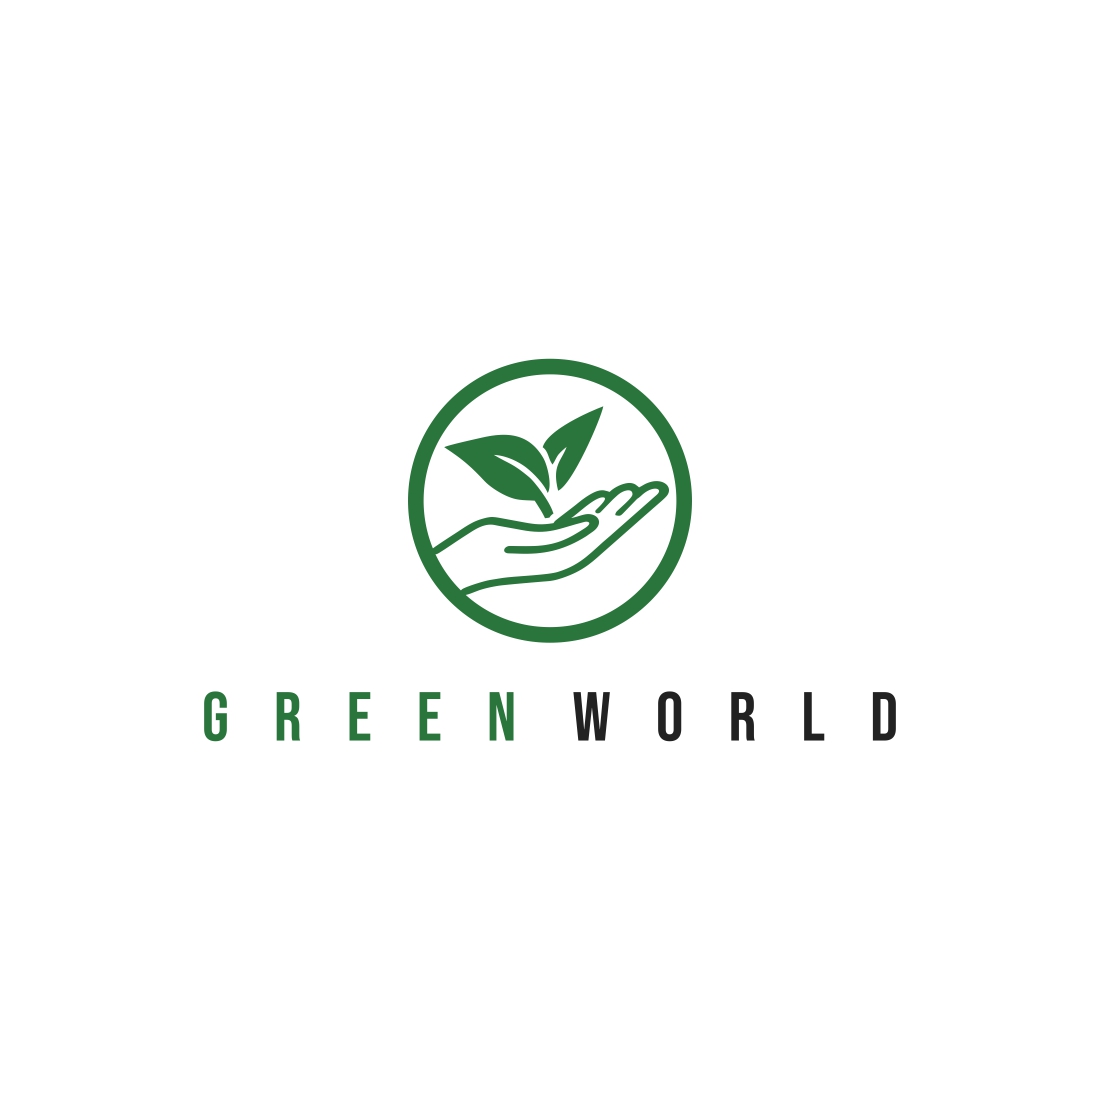 Environmental Protection Nature Environment Logo cover image.